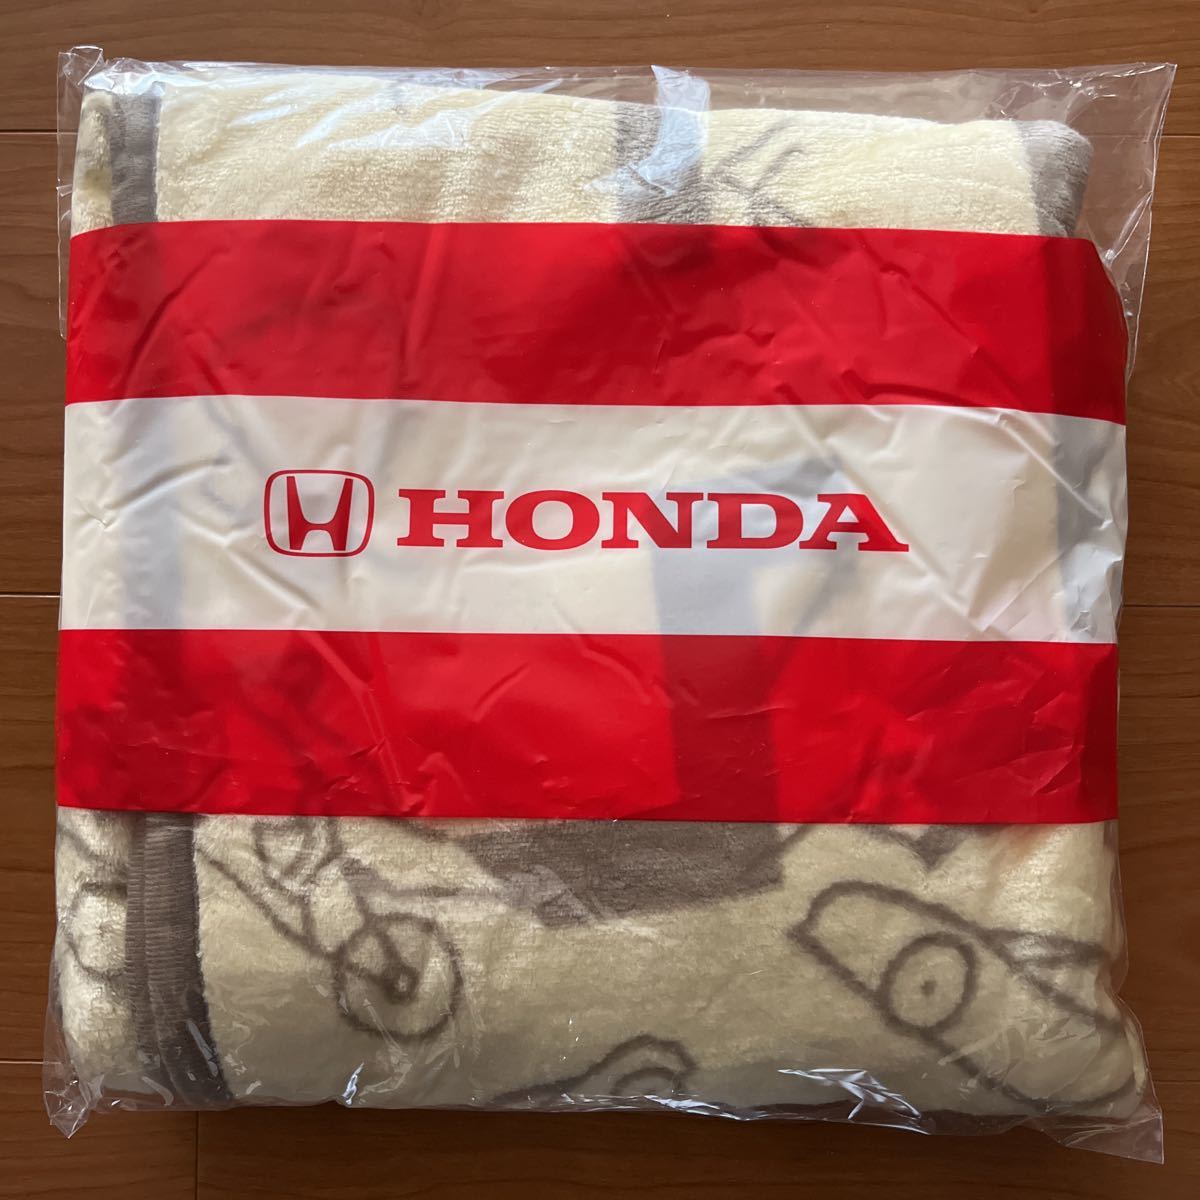 Honda Honda original soft fleece blanket approximately 120cm×90cm